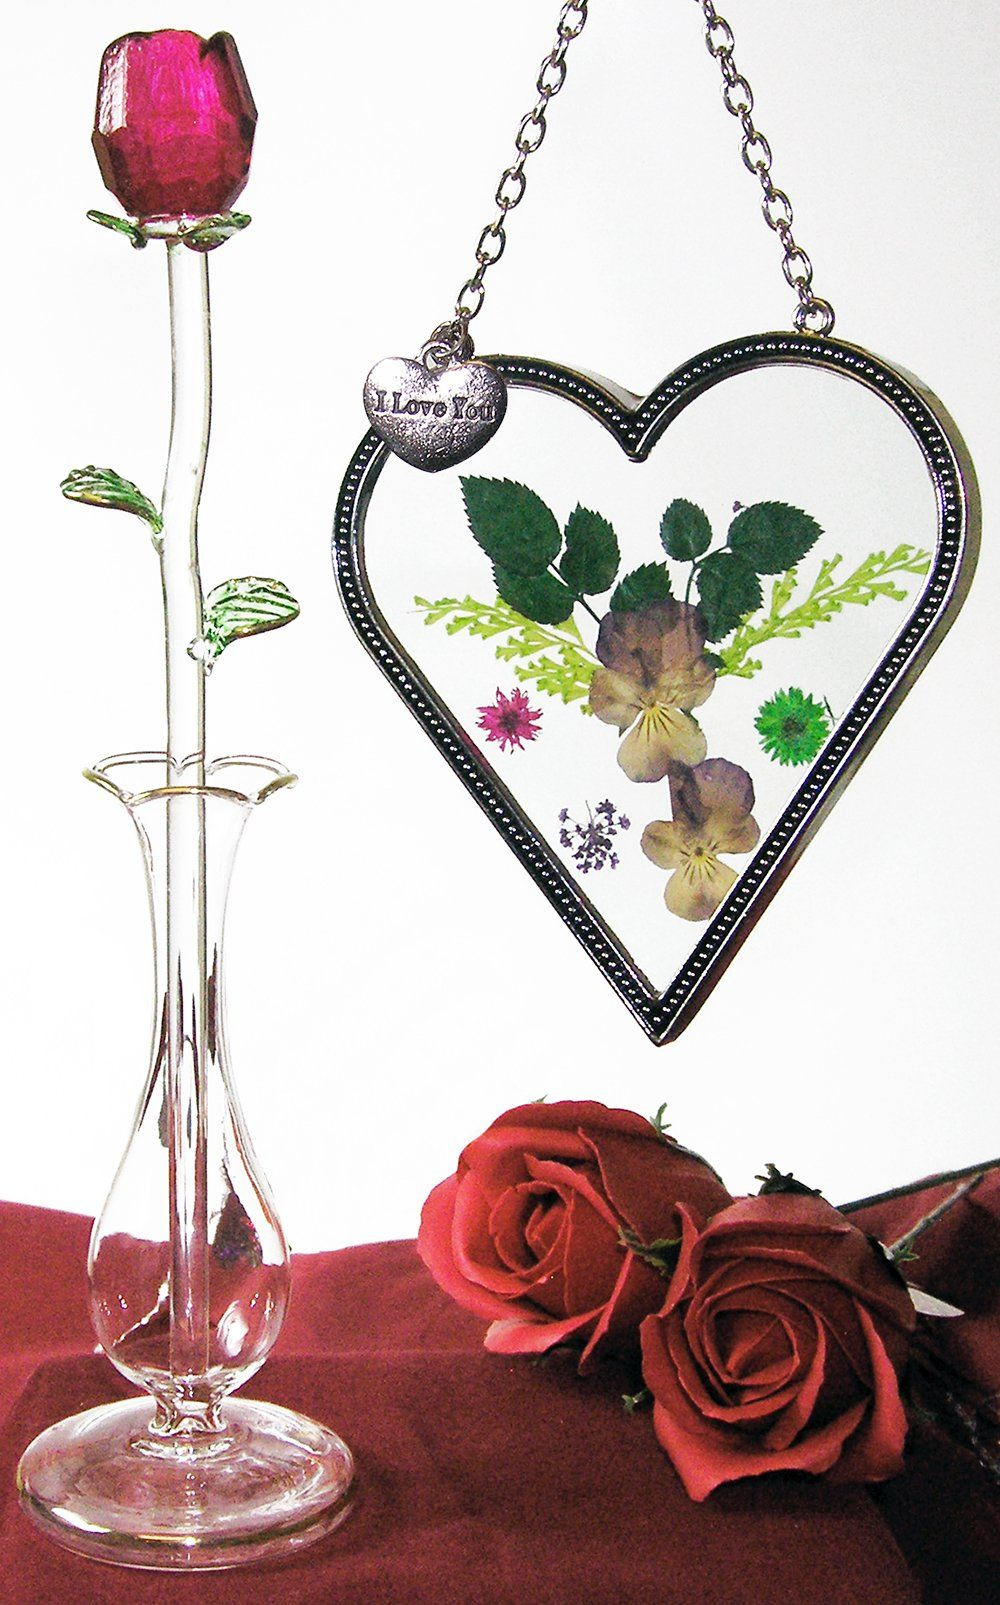 Glass Beads for Flower Vases Of Mothers Day Gift Red Glass Rose and Heart Suncatcher forever with Mothers Day Gift Red Glass Rose and Heart Suncatcher forever Rose and I Love